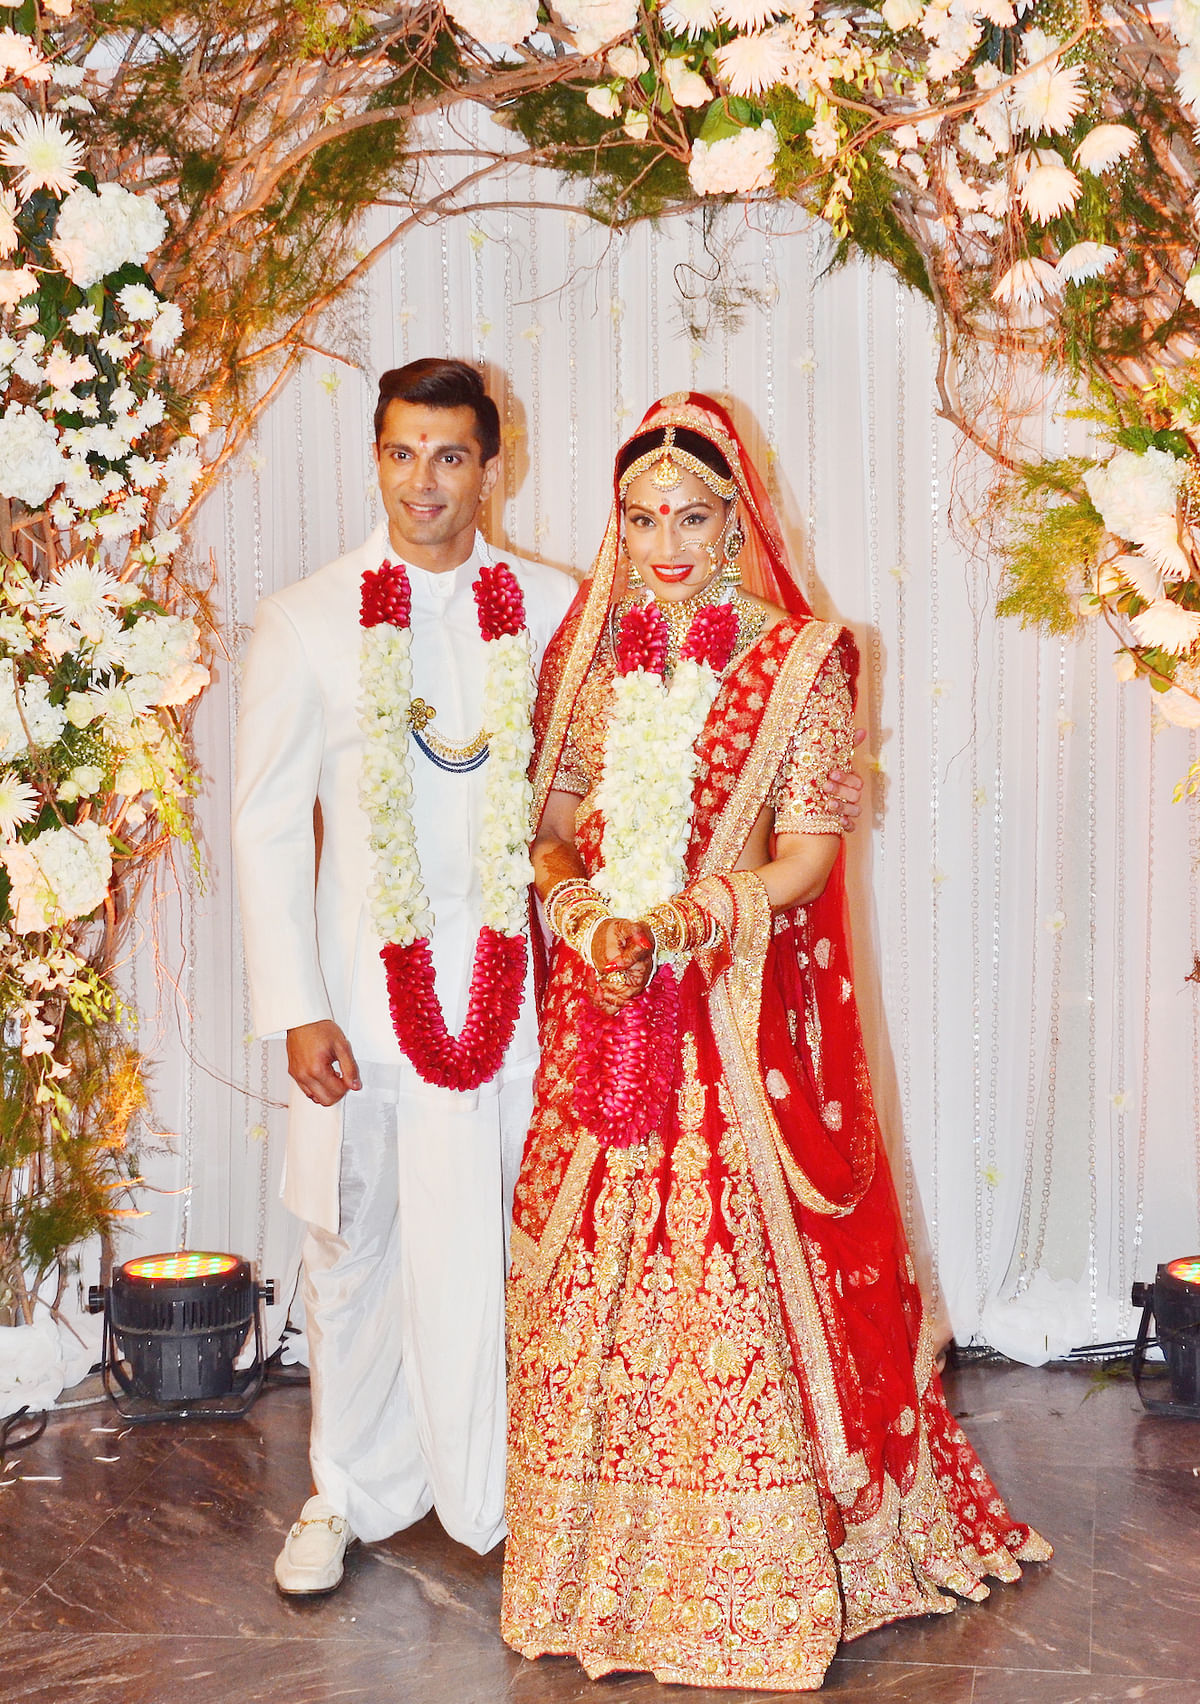  Bipasha Basu and Karan Singh Grover pose after their wedding